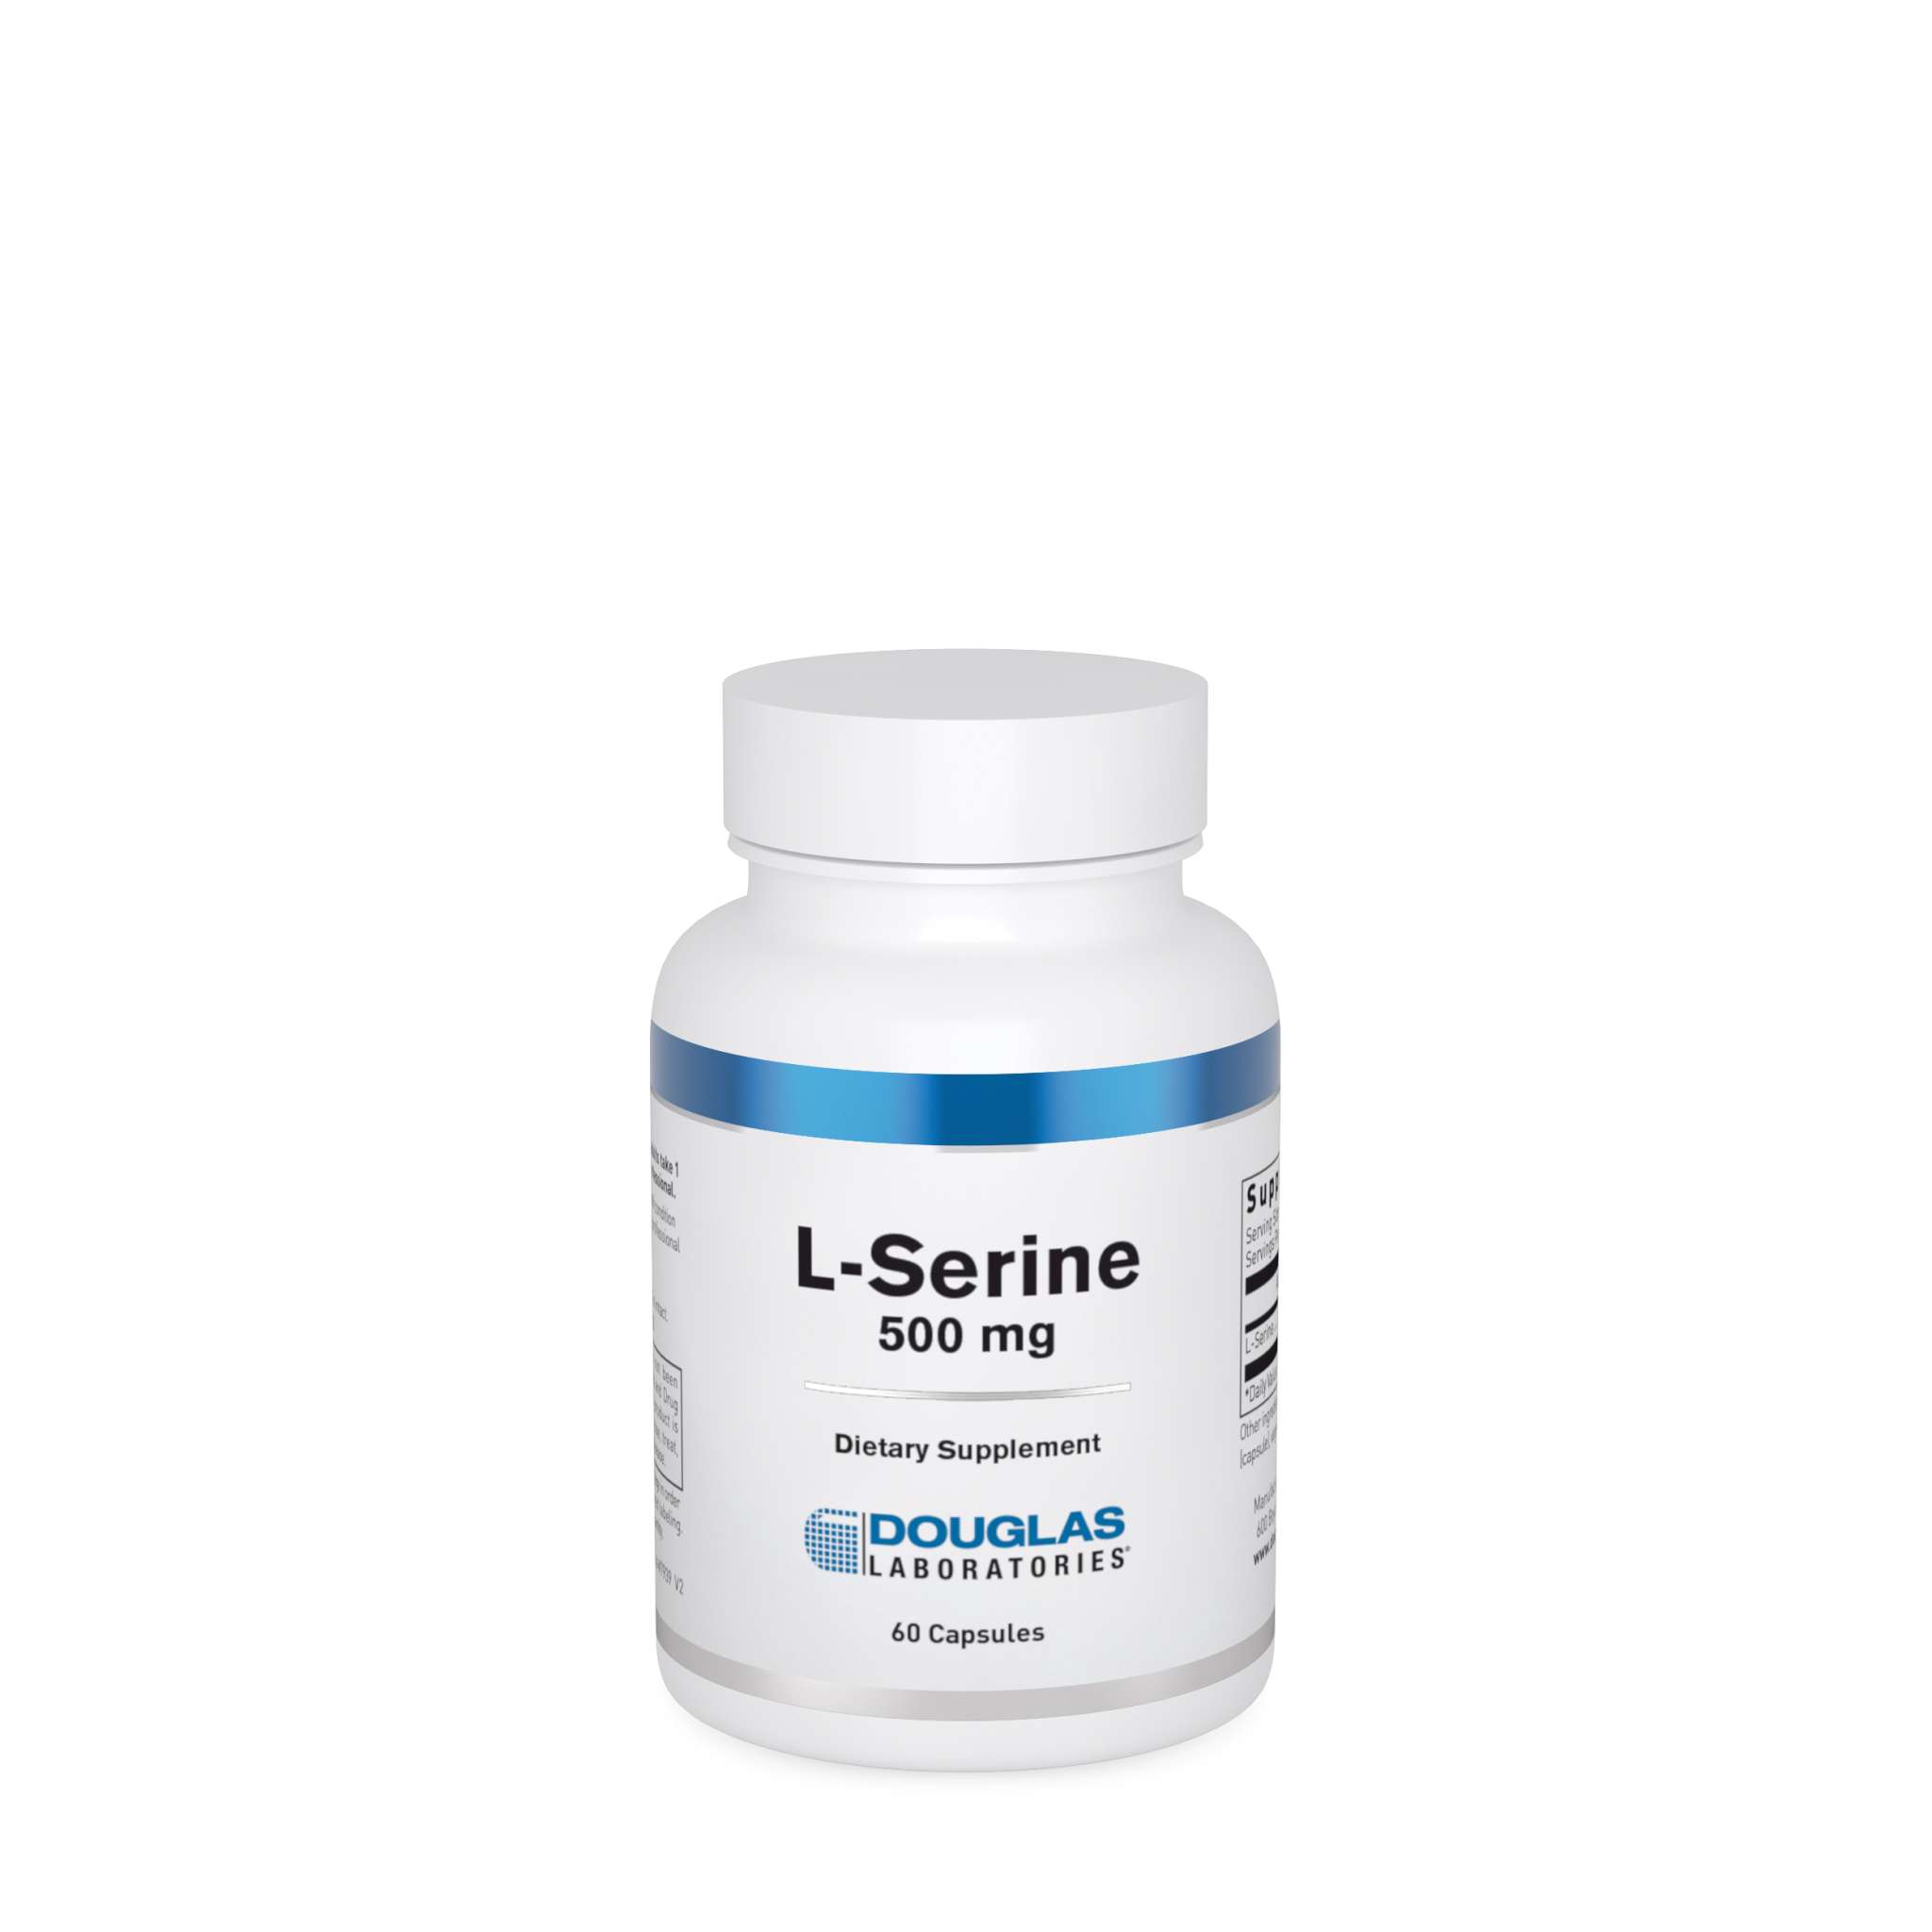 Douglas Laboratories - Serine 500 mg